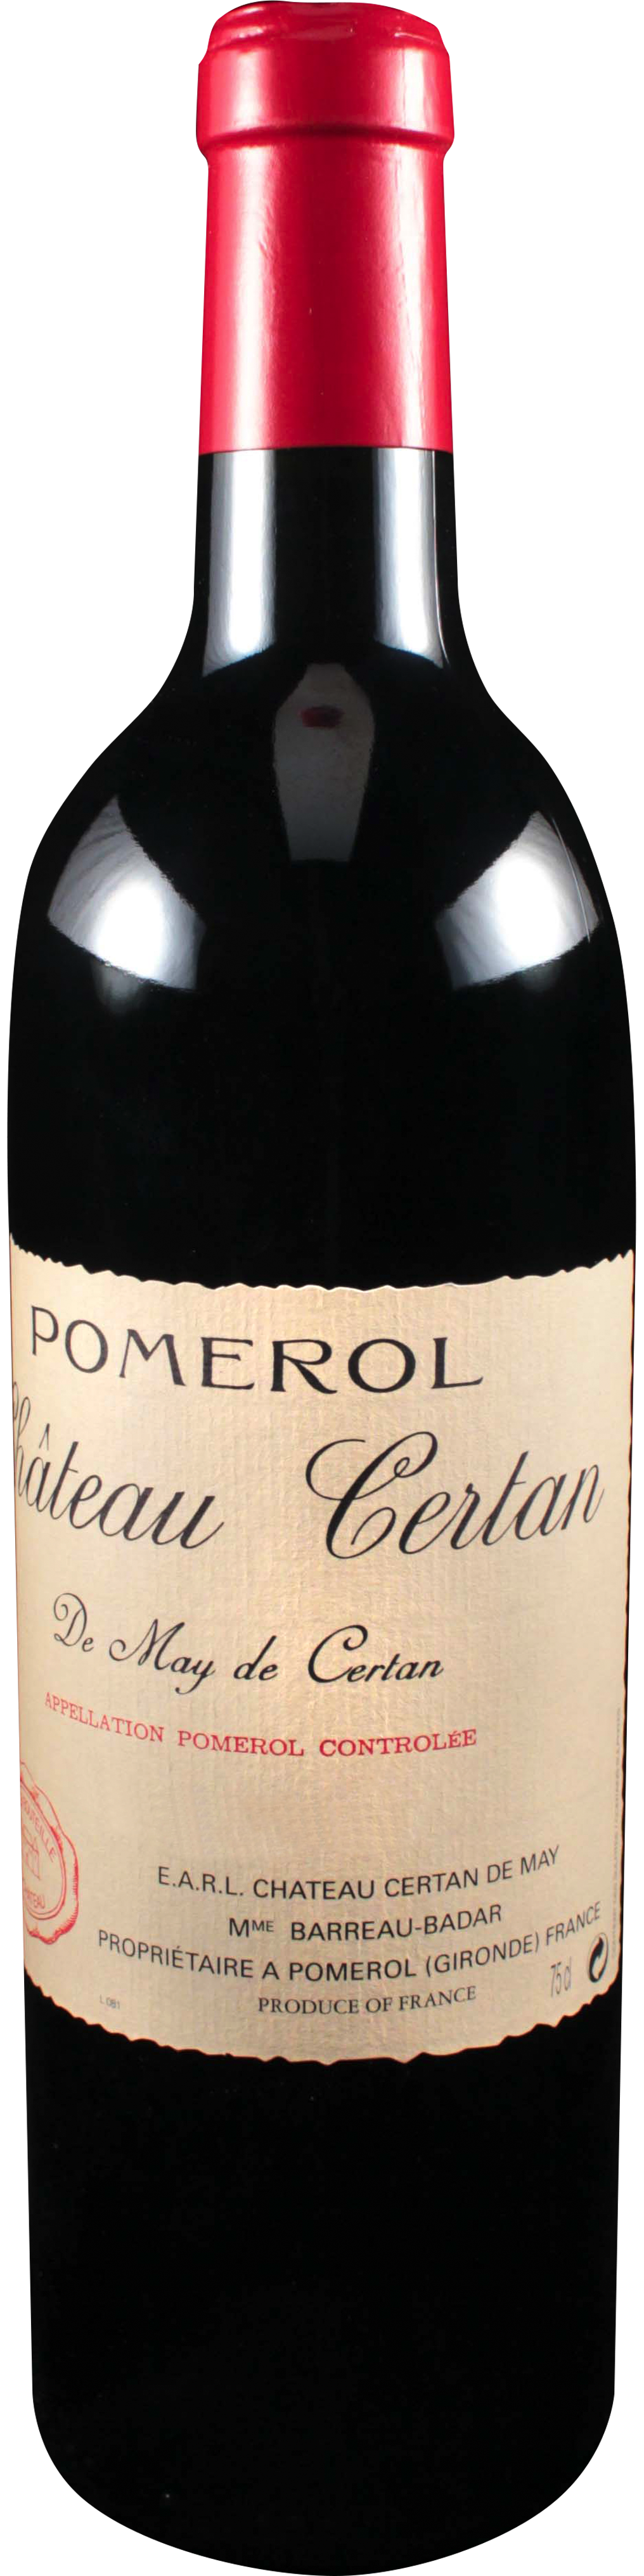 Bottle shot of 2008 Château Certan de May, Pomerol